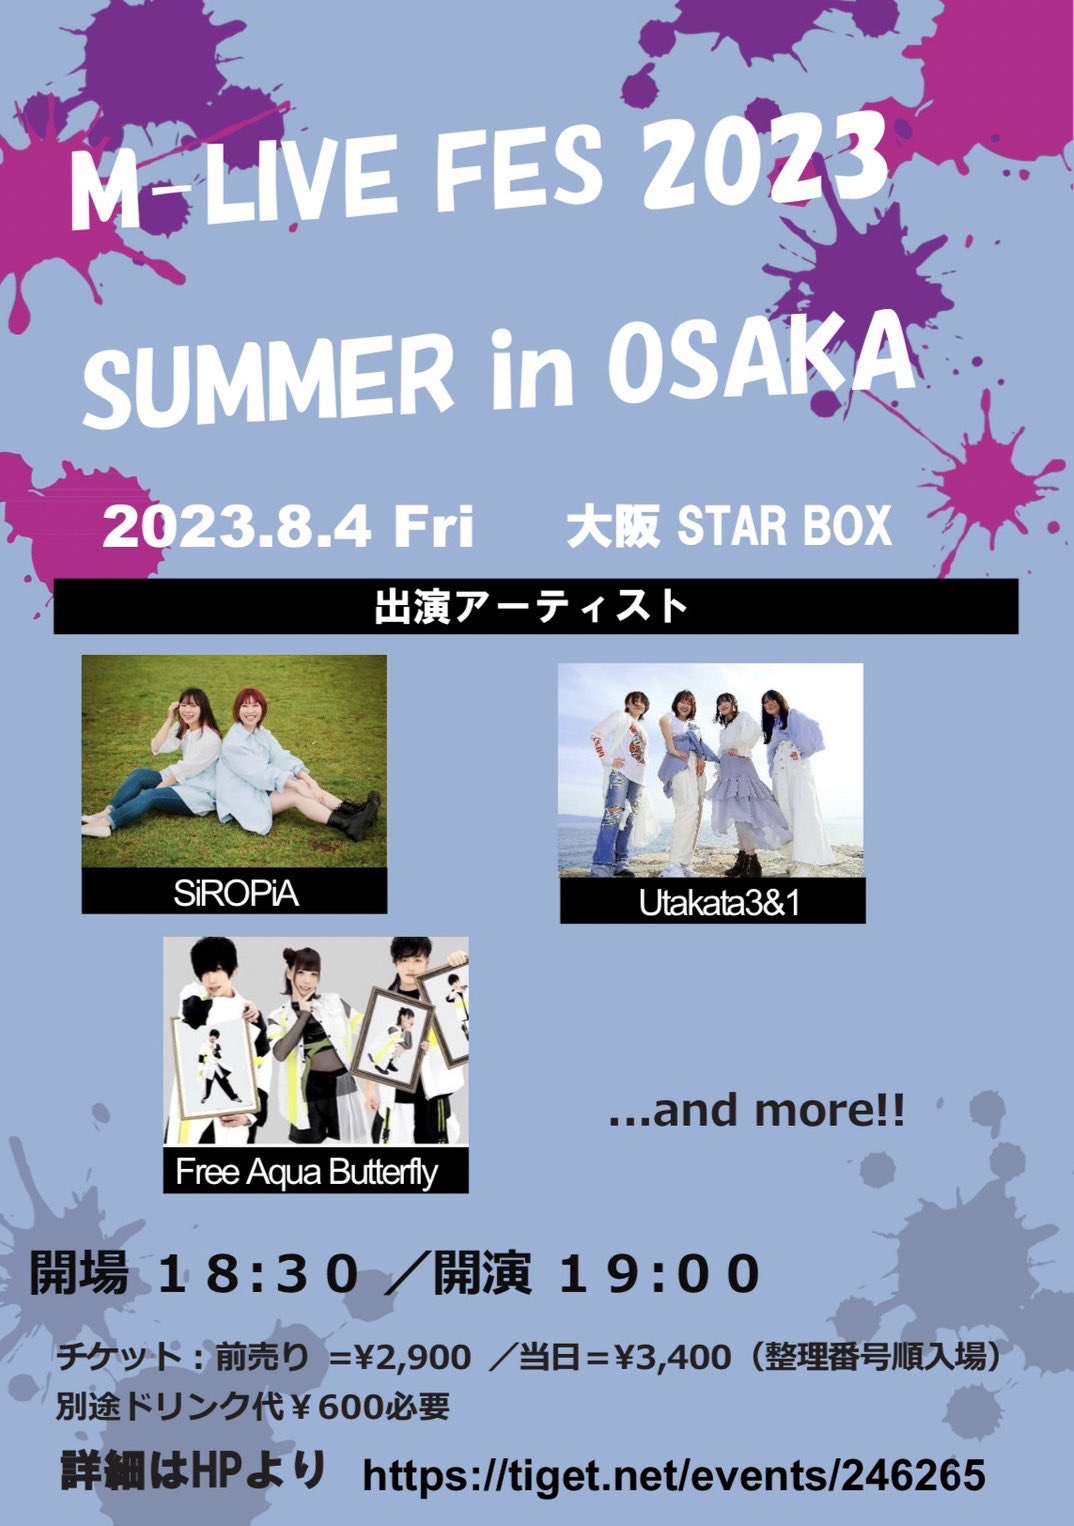 M-LIVE FES 2023 SUMMER in OSAKA